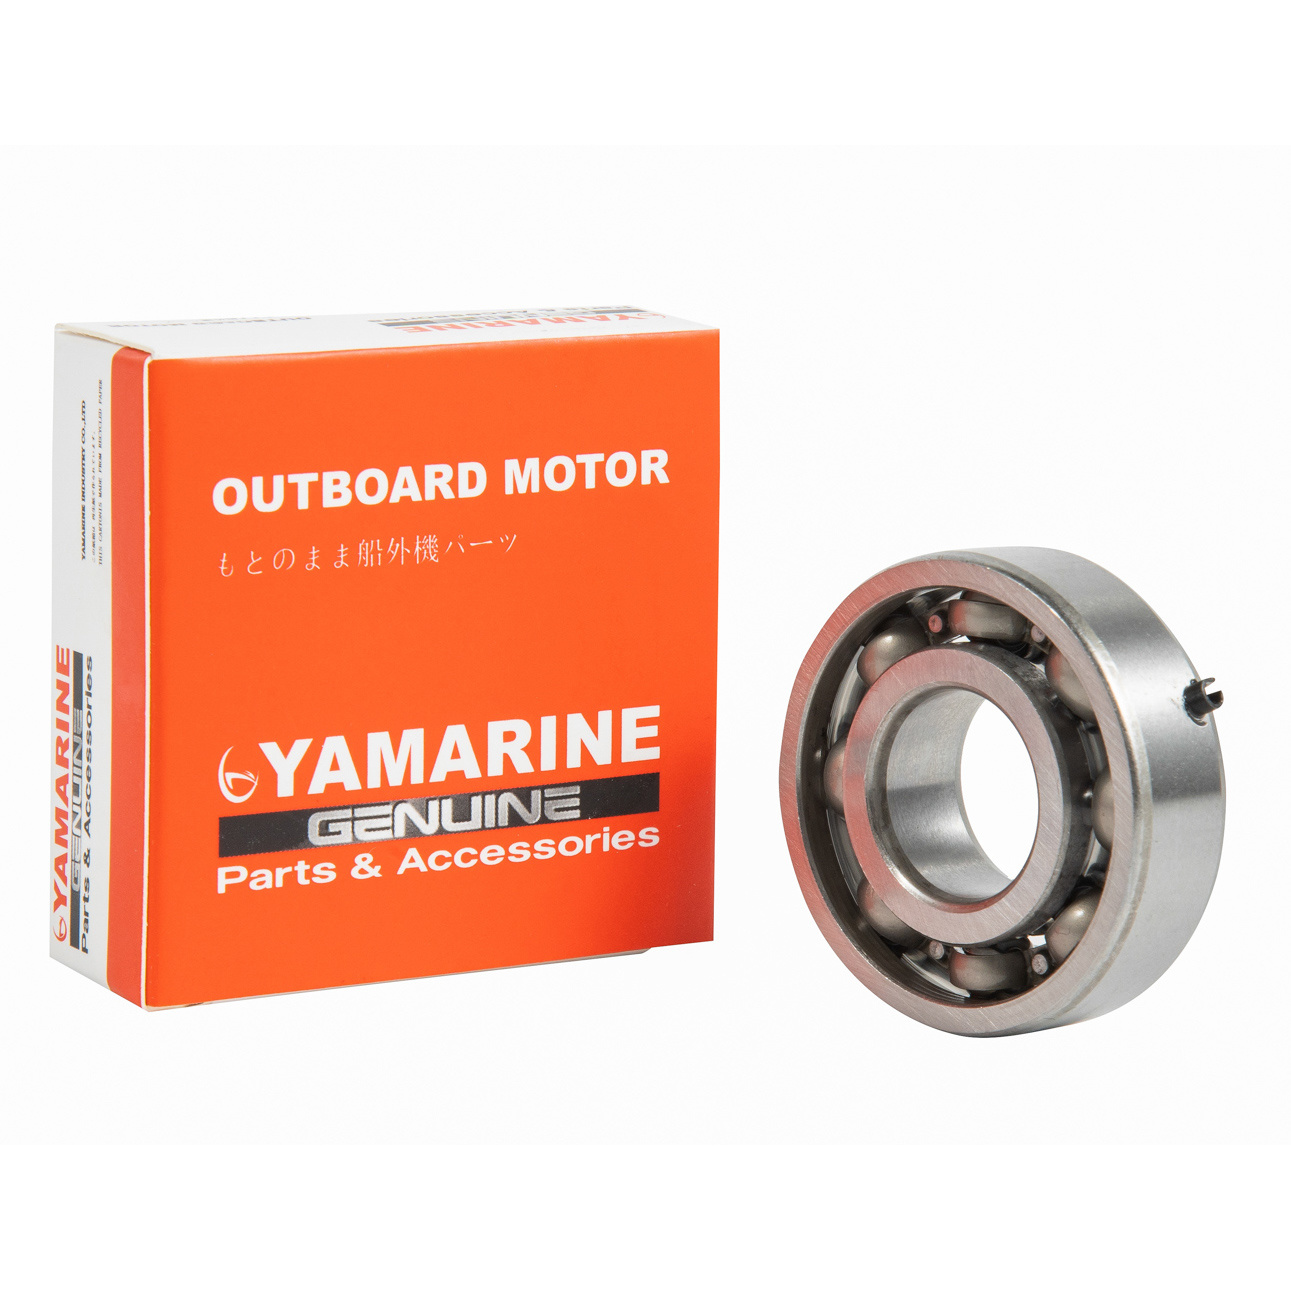 Yamarine Outboard Piston Kit 6f5-11631-00-95, 6f6-11631-00-95, with Piston Ring 6f5-11603-00 for 40HP, E40g/J YAMAHA Engine